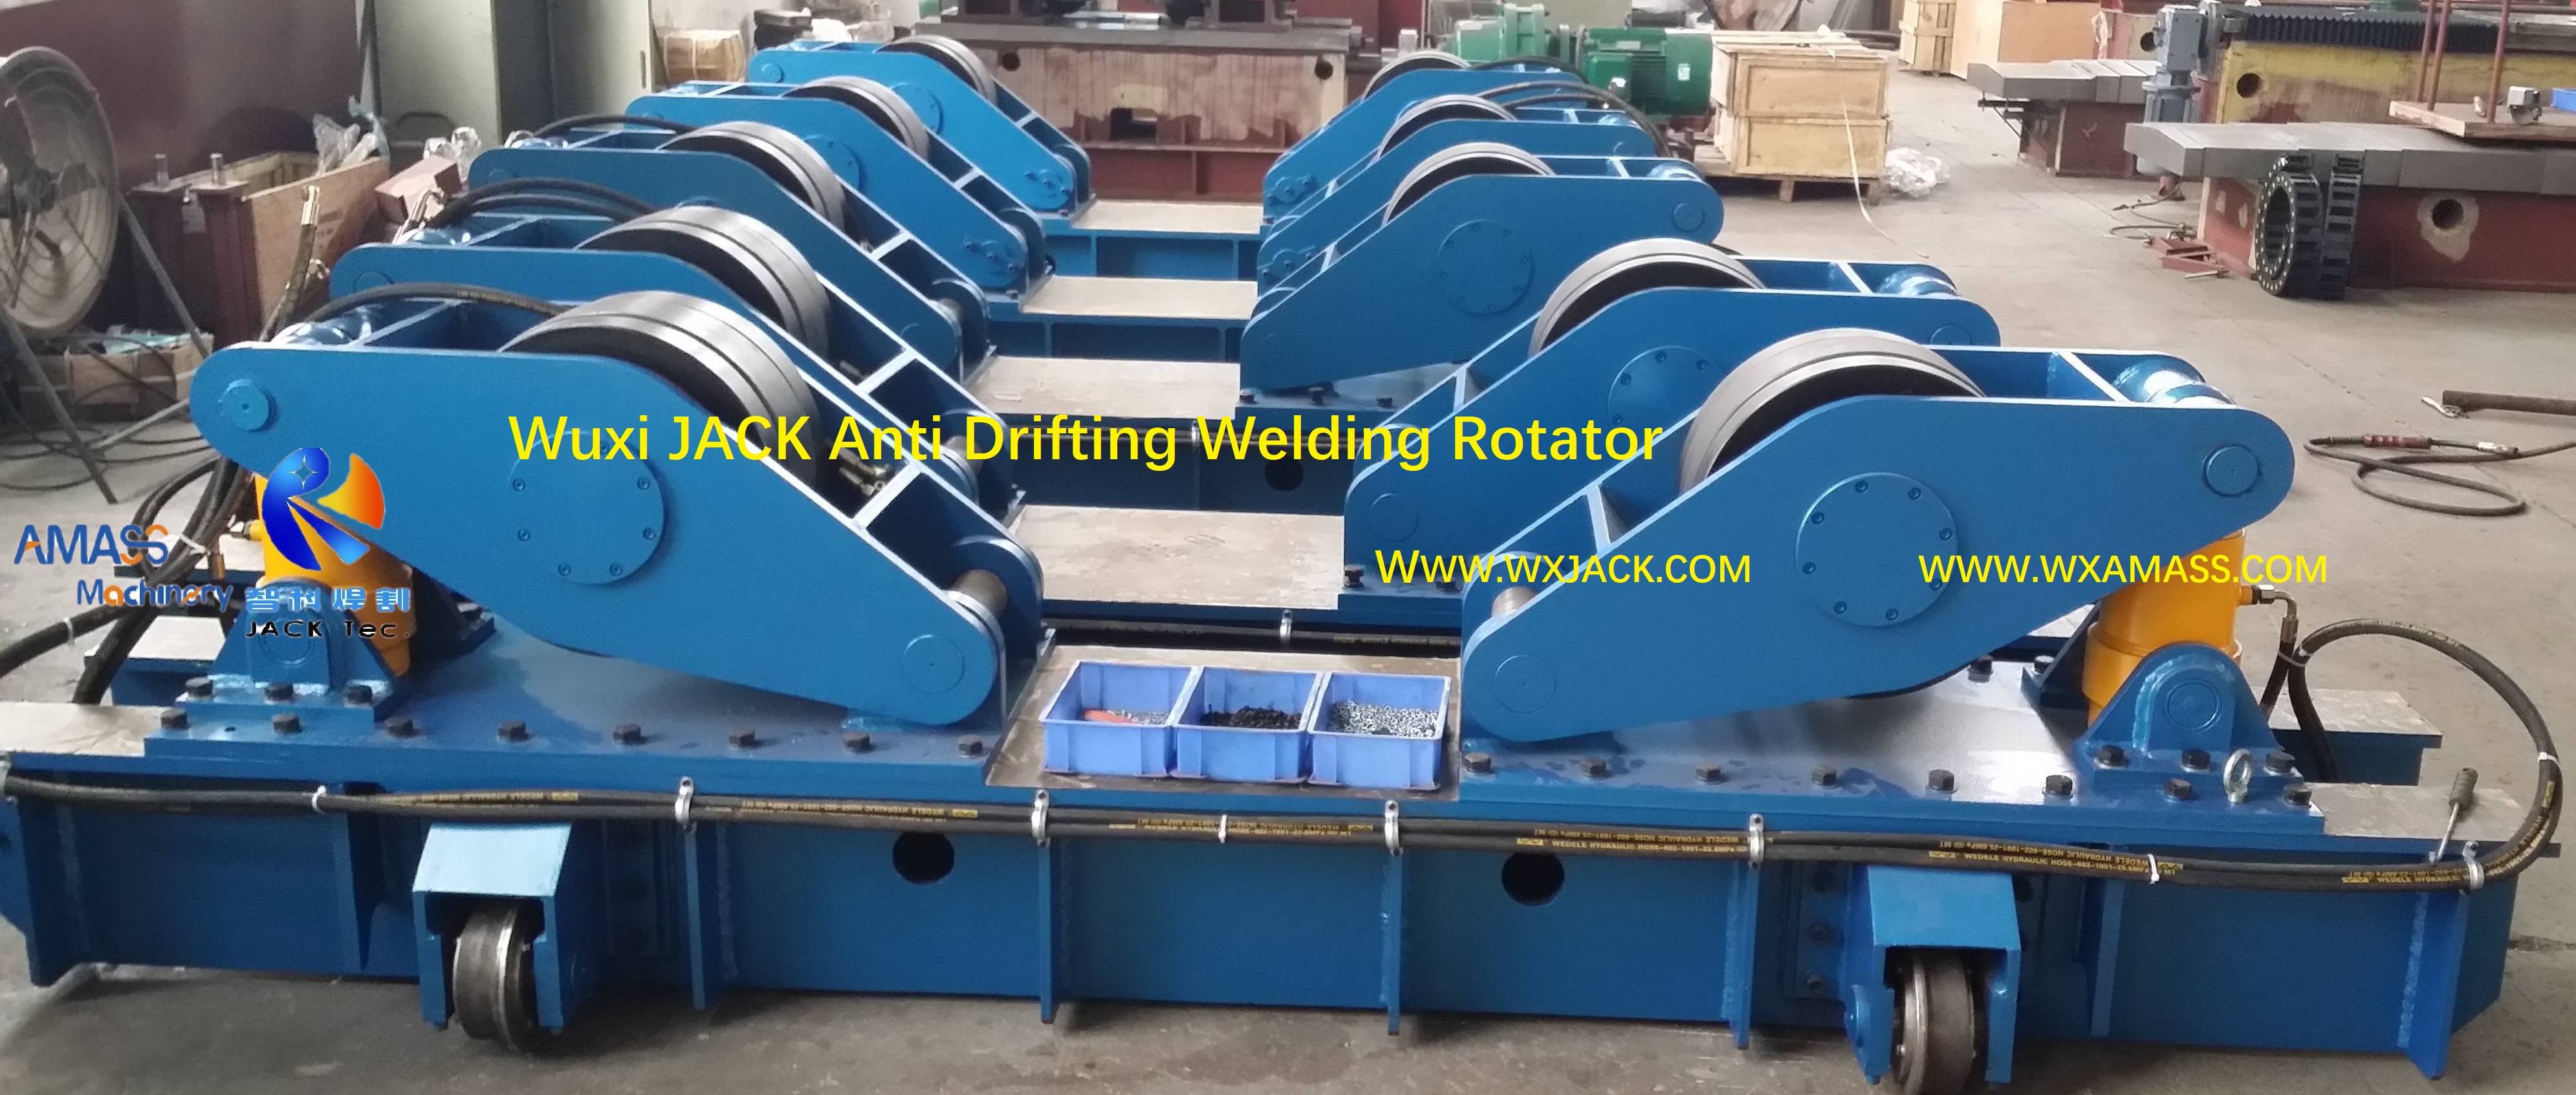 1 Banner Welding Rotator 6 Summary- 20141219_112310